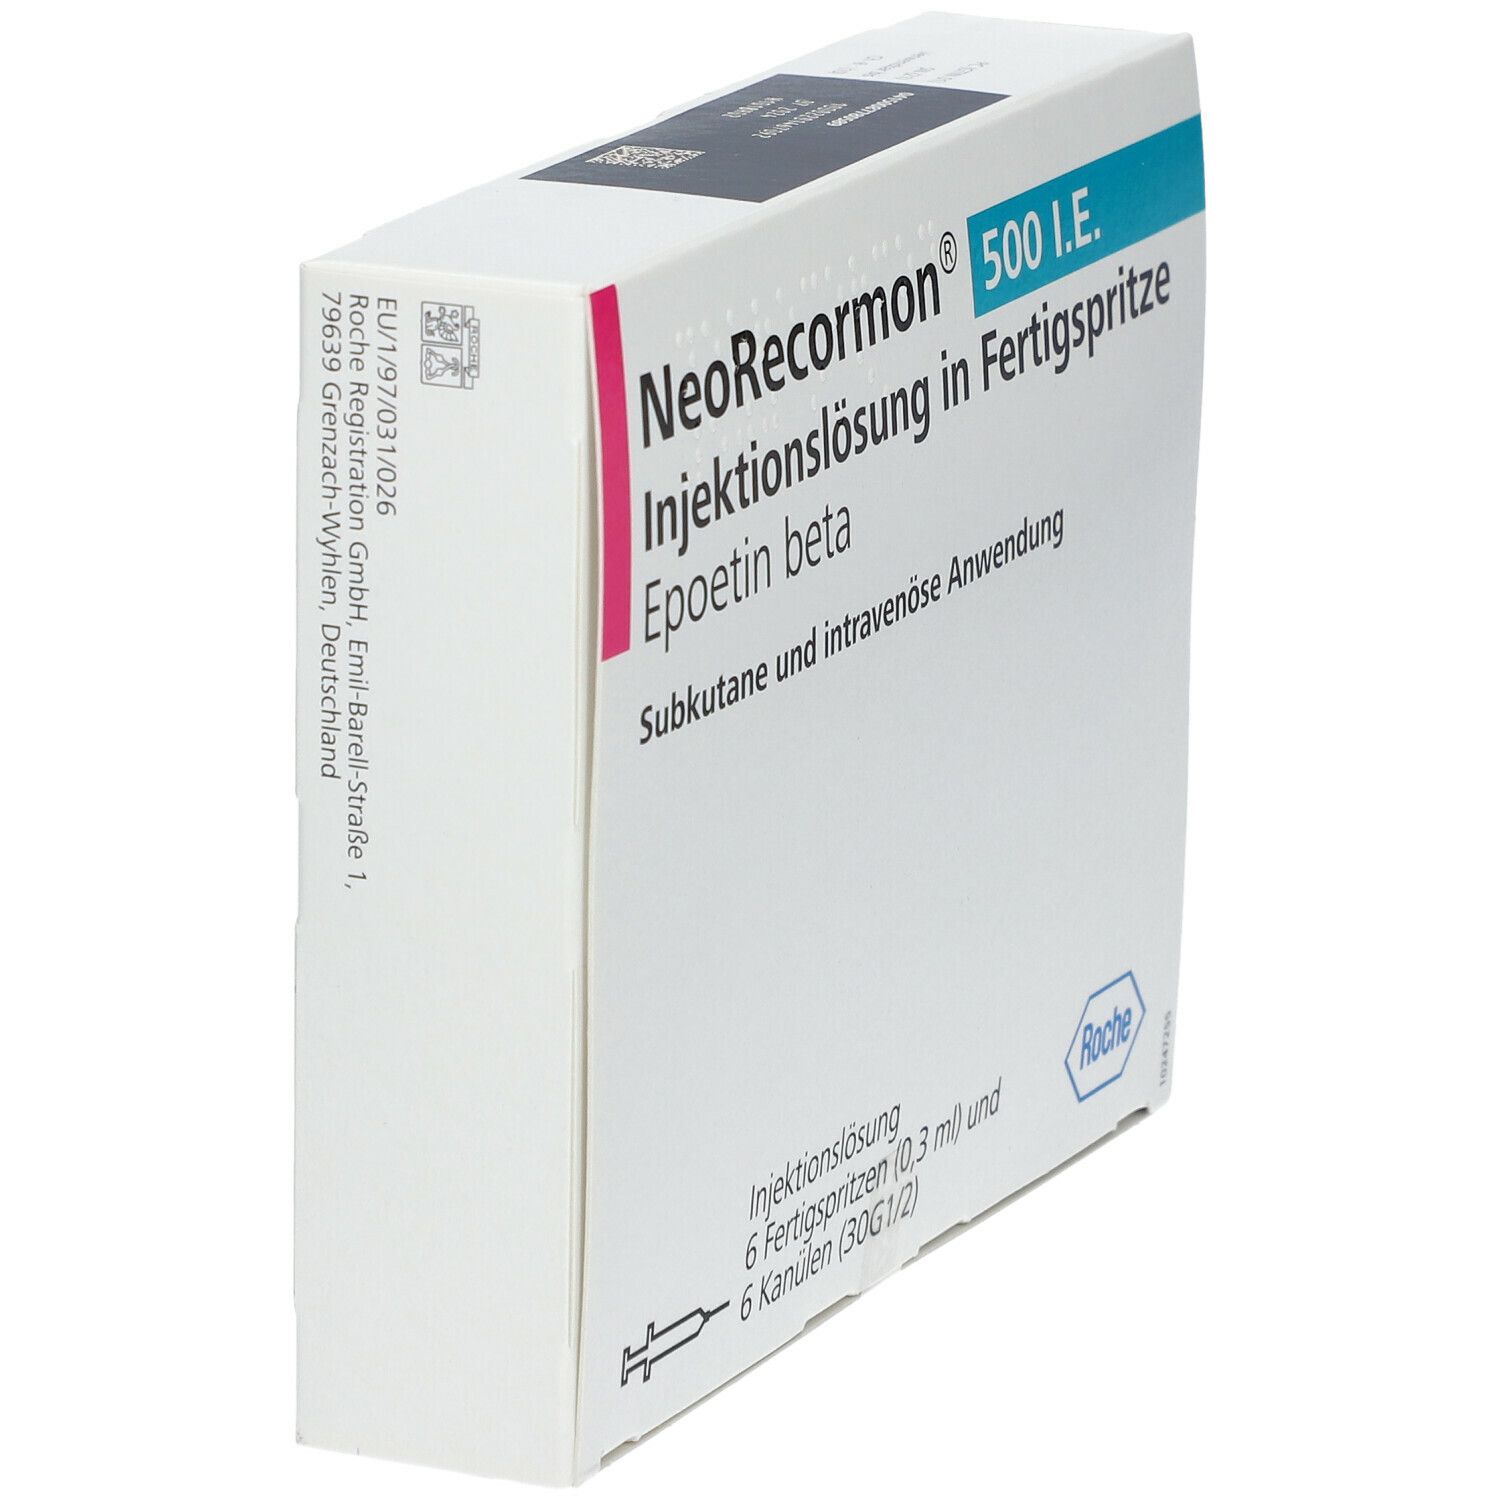 NeoRecormon® 500 I.E.